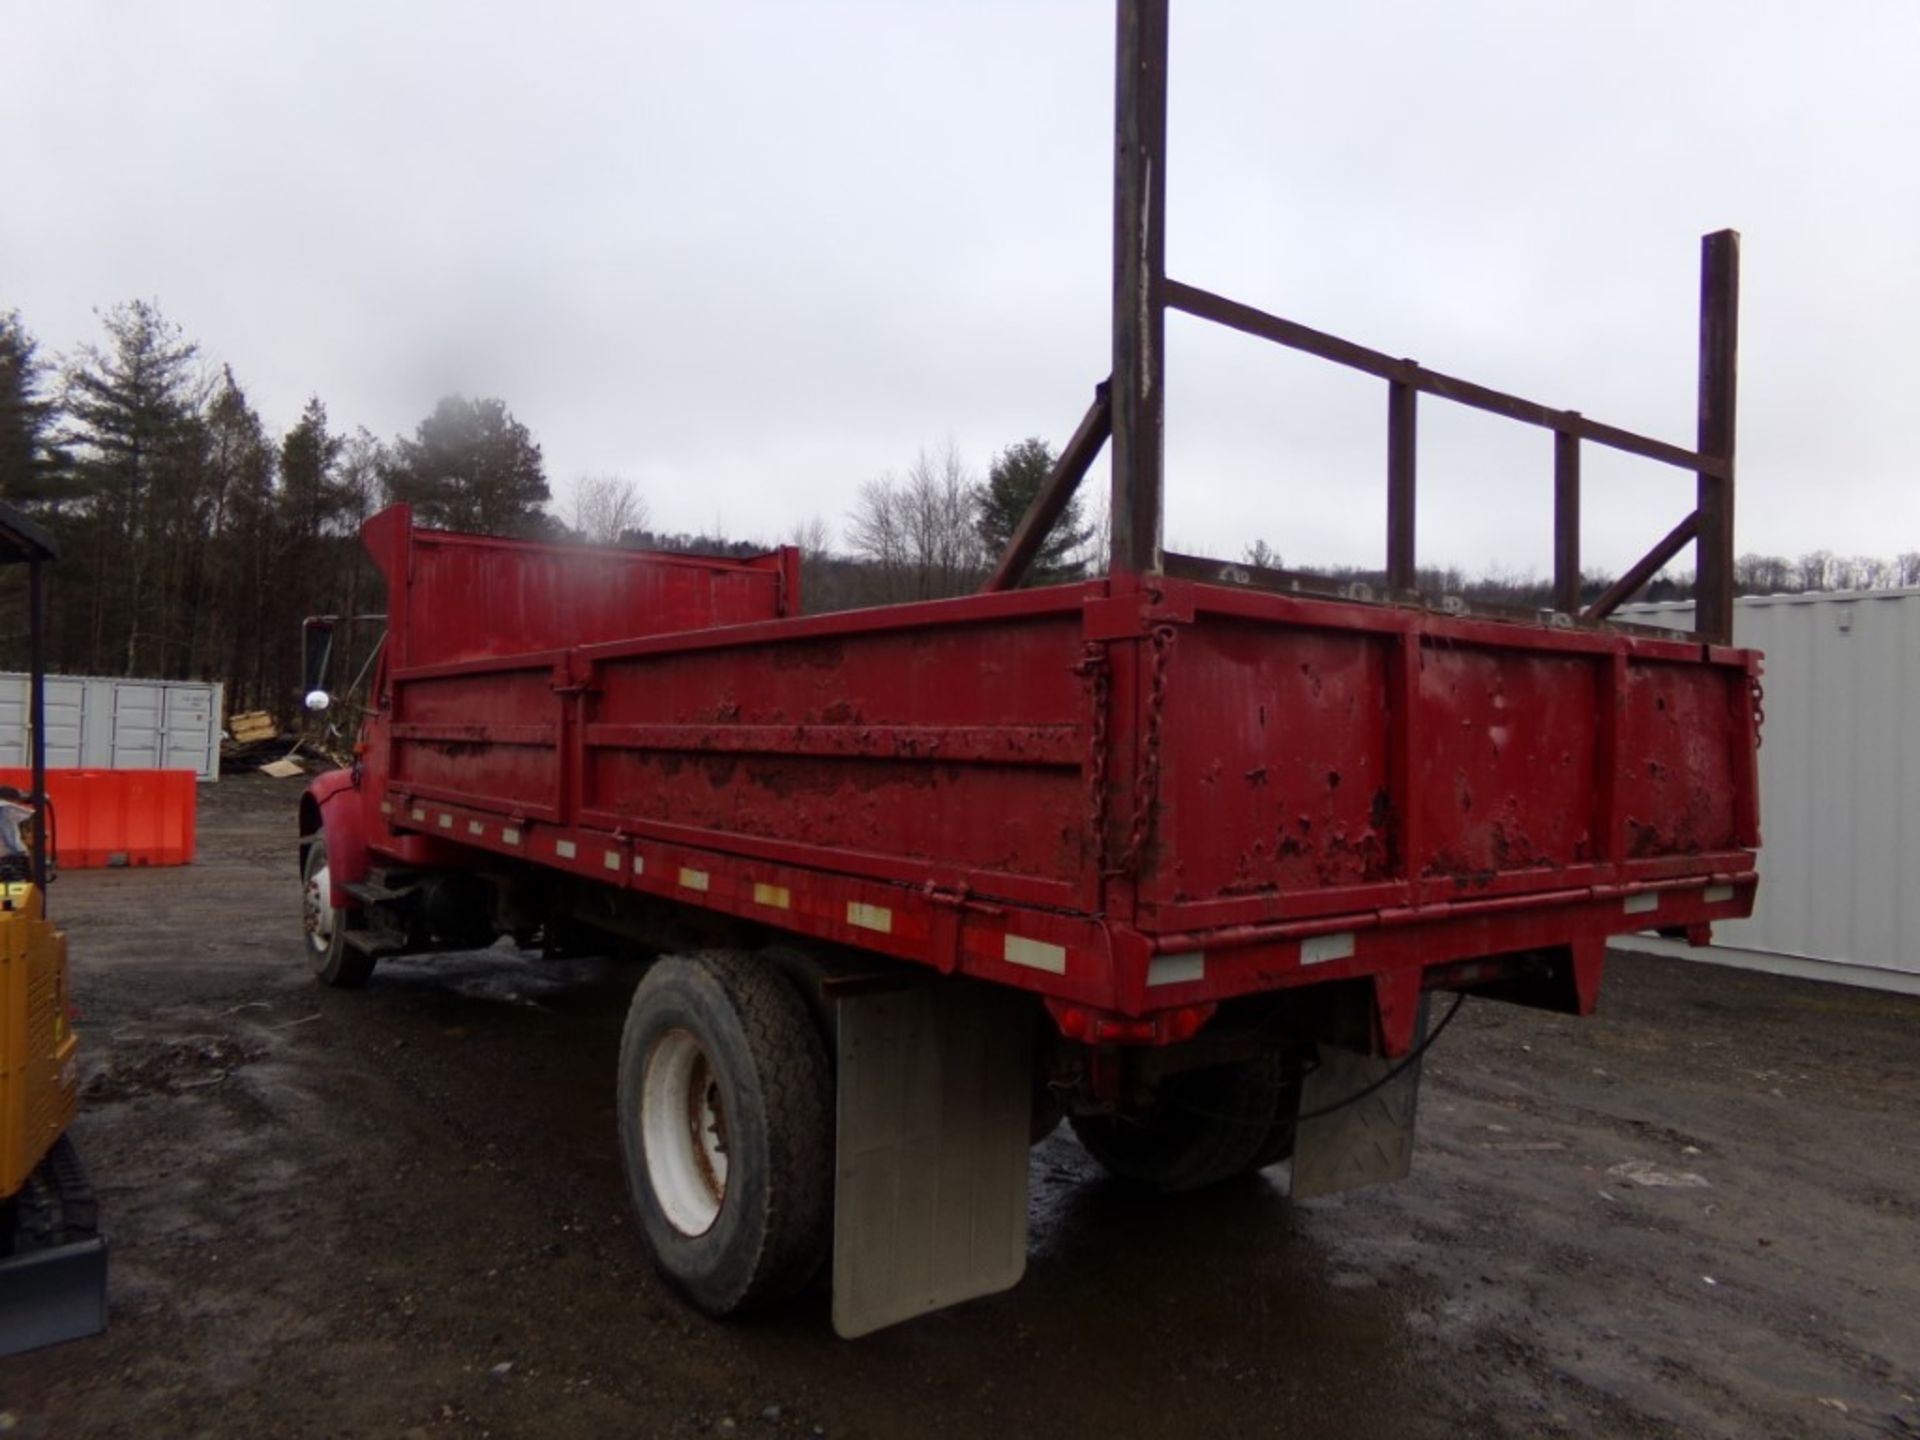 1996 International 4700, S/A Dump Truck, Red, Extra-Long Landscaper Dump Box w/Drop Down Sides, - Image 2 of 11